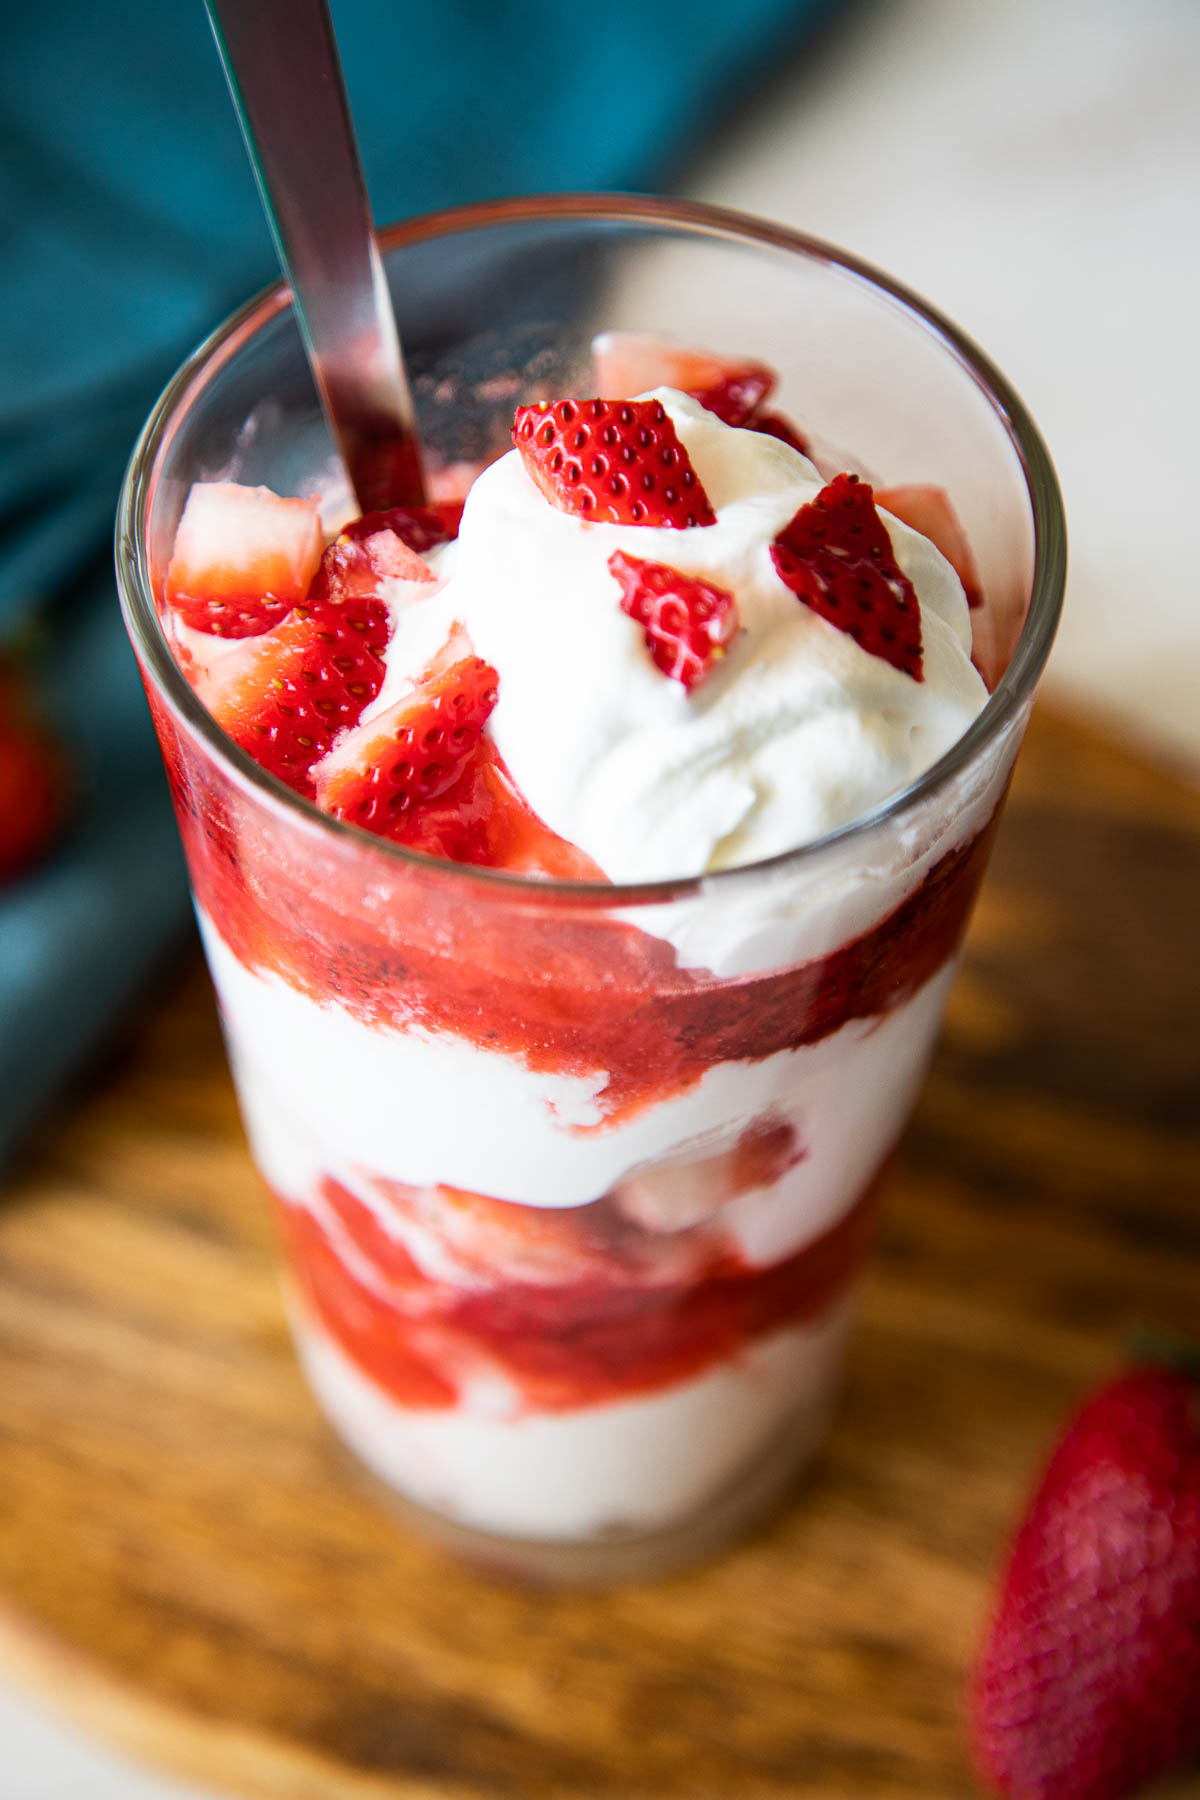 Strawberry Ice Cream Sundae in Pint Glass - Close Up